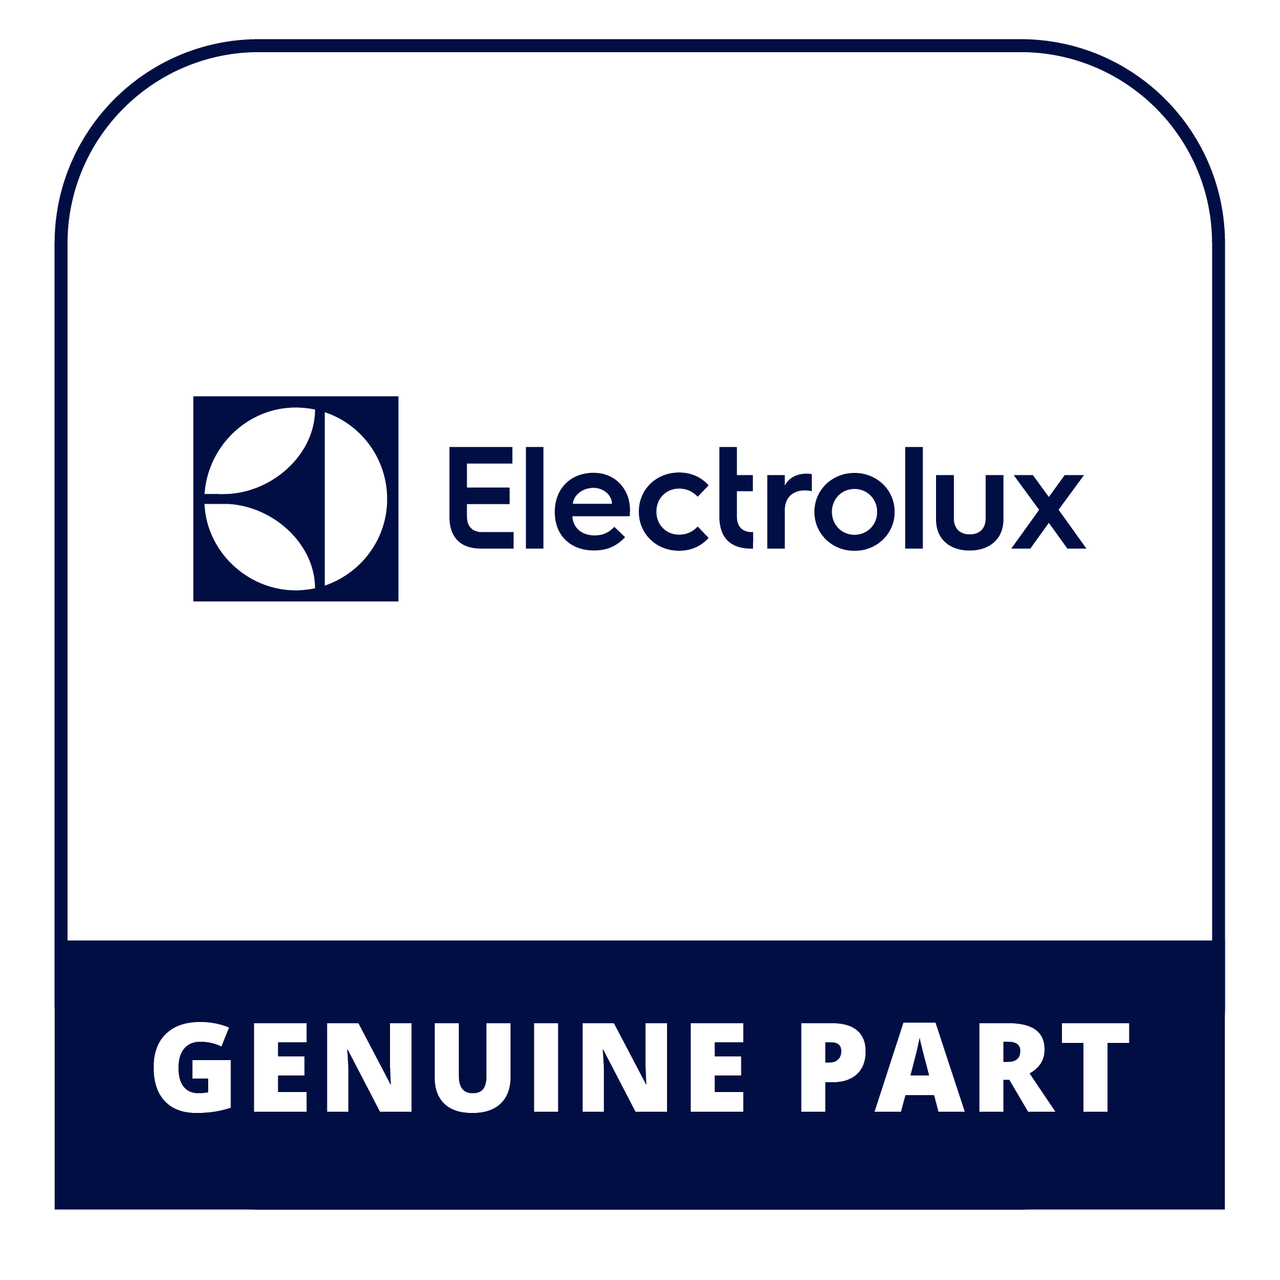 Frigidaire - Electrolux 555030502 Transformer - Genuine Electrolux Part